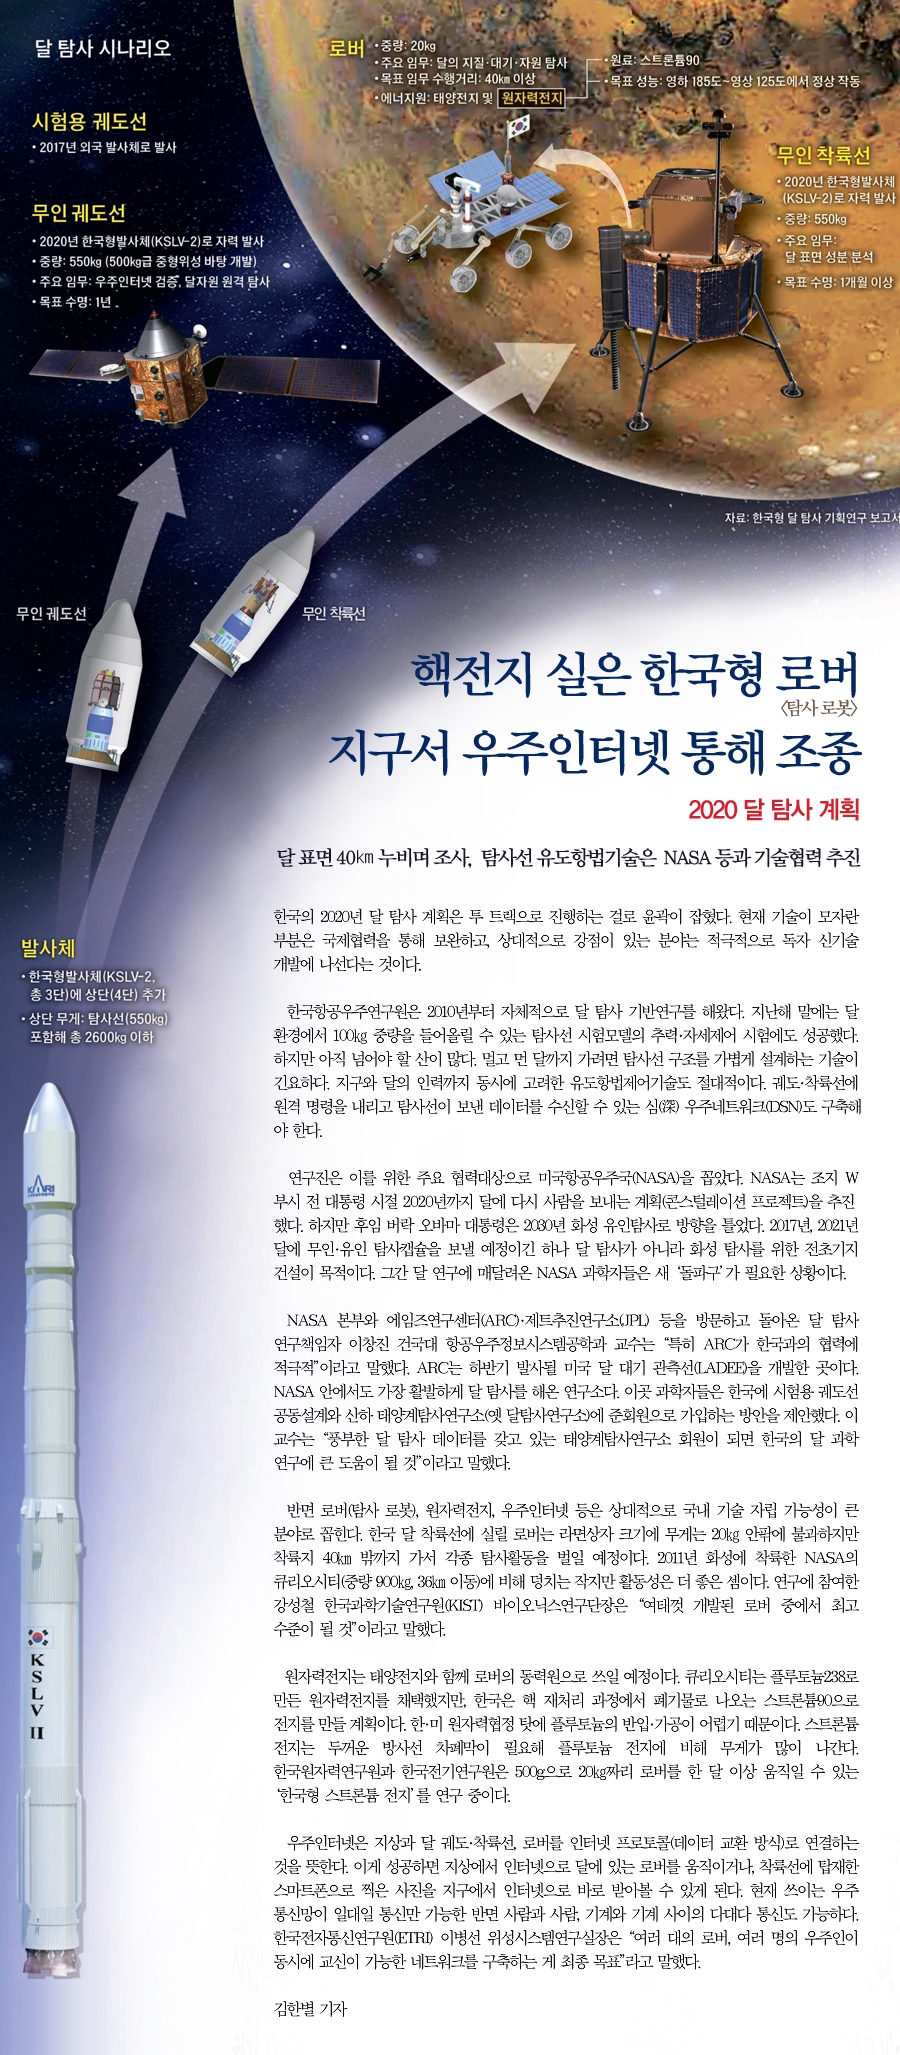 South Korea lunar mission infographic (Credits:  Joongang Ilbo).